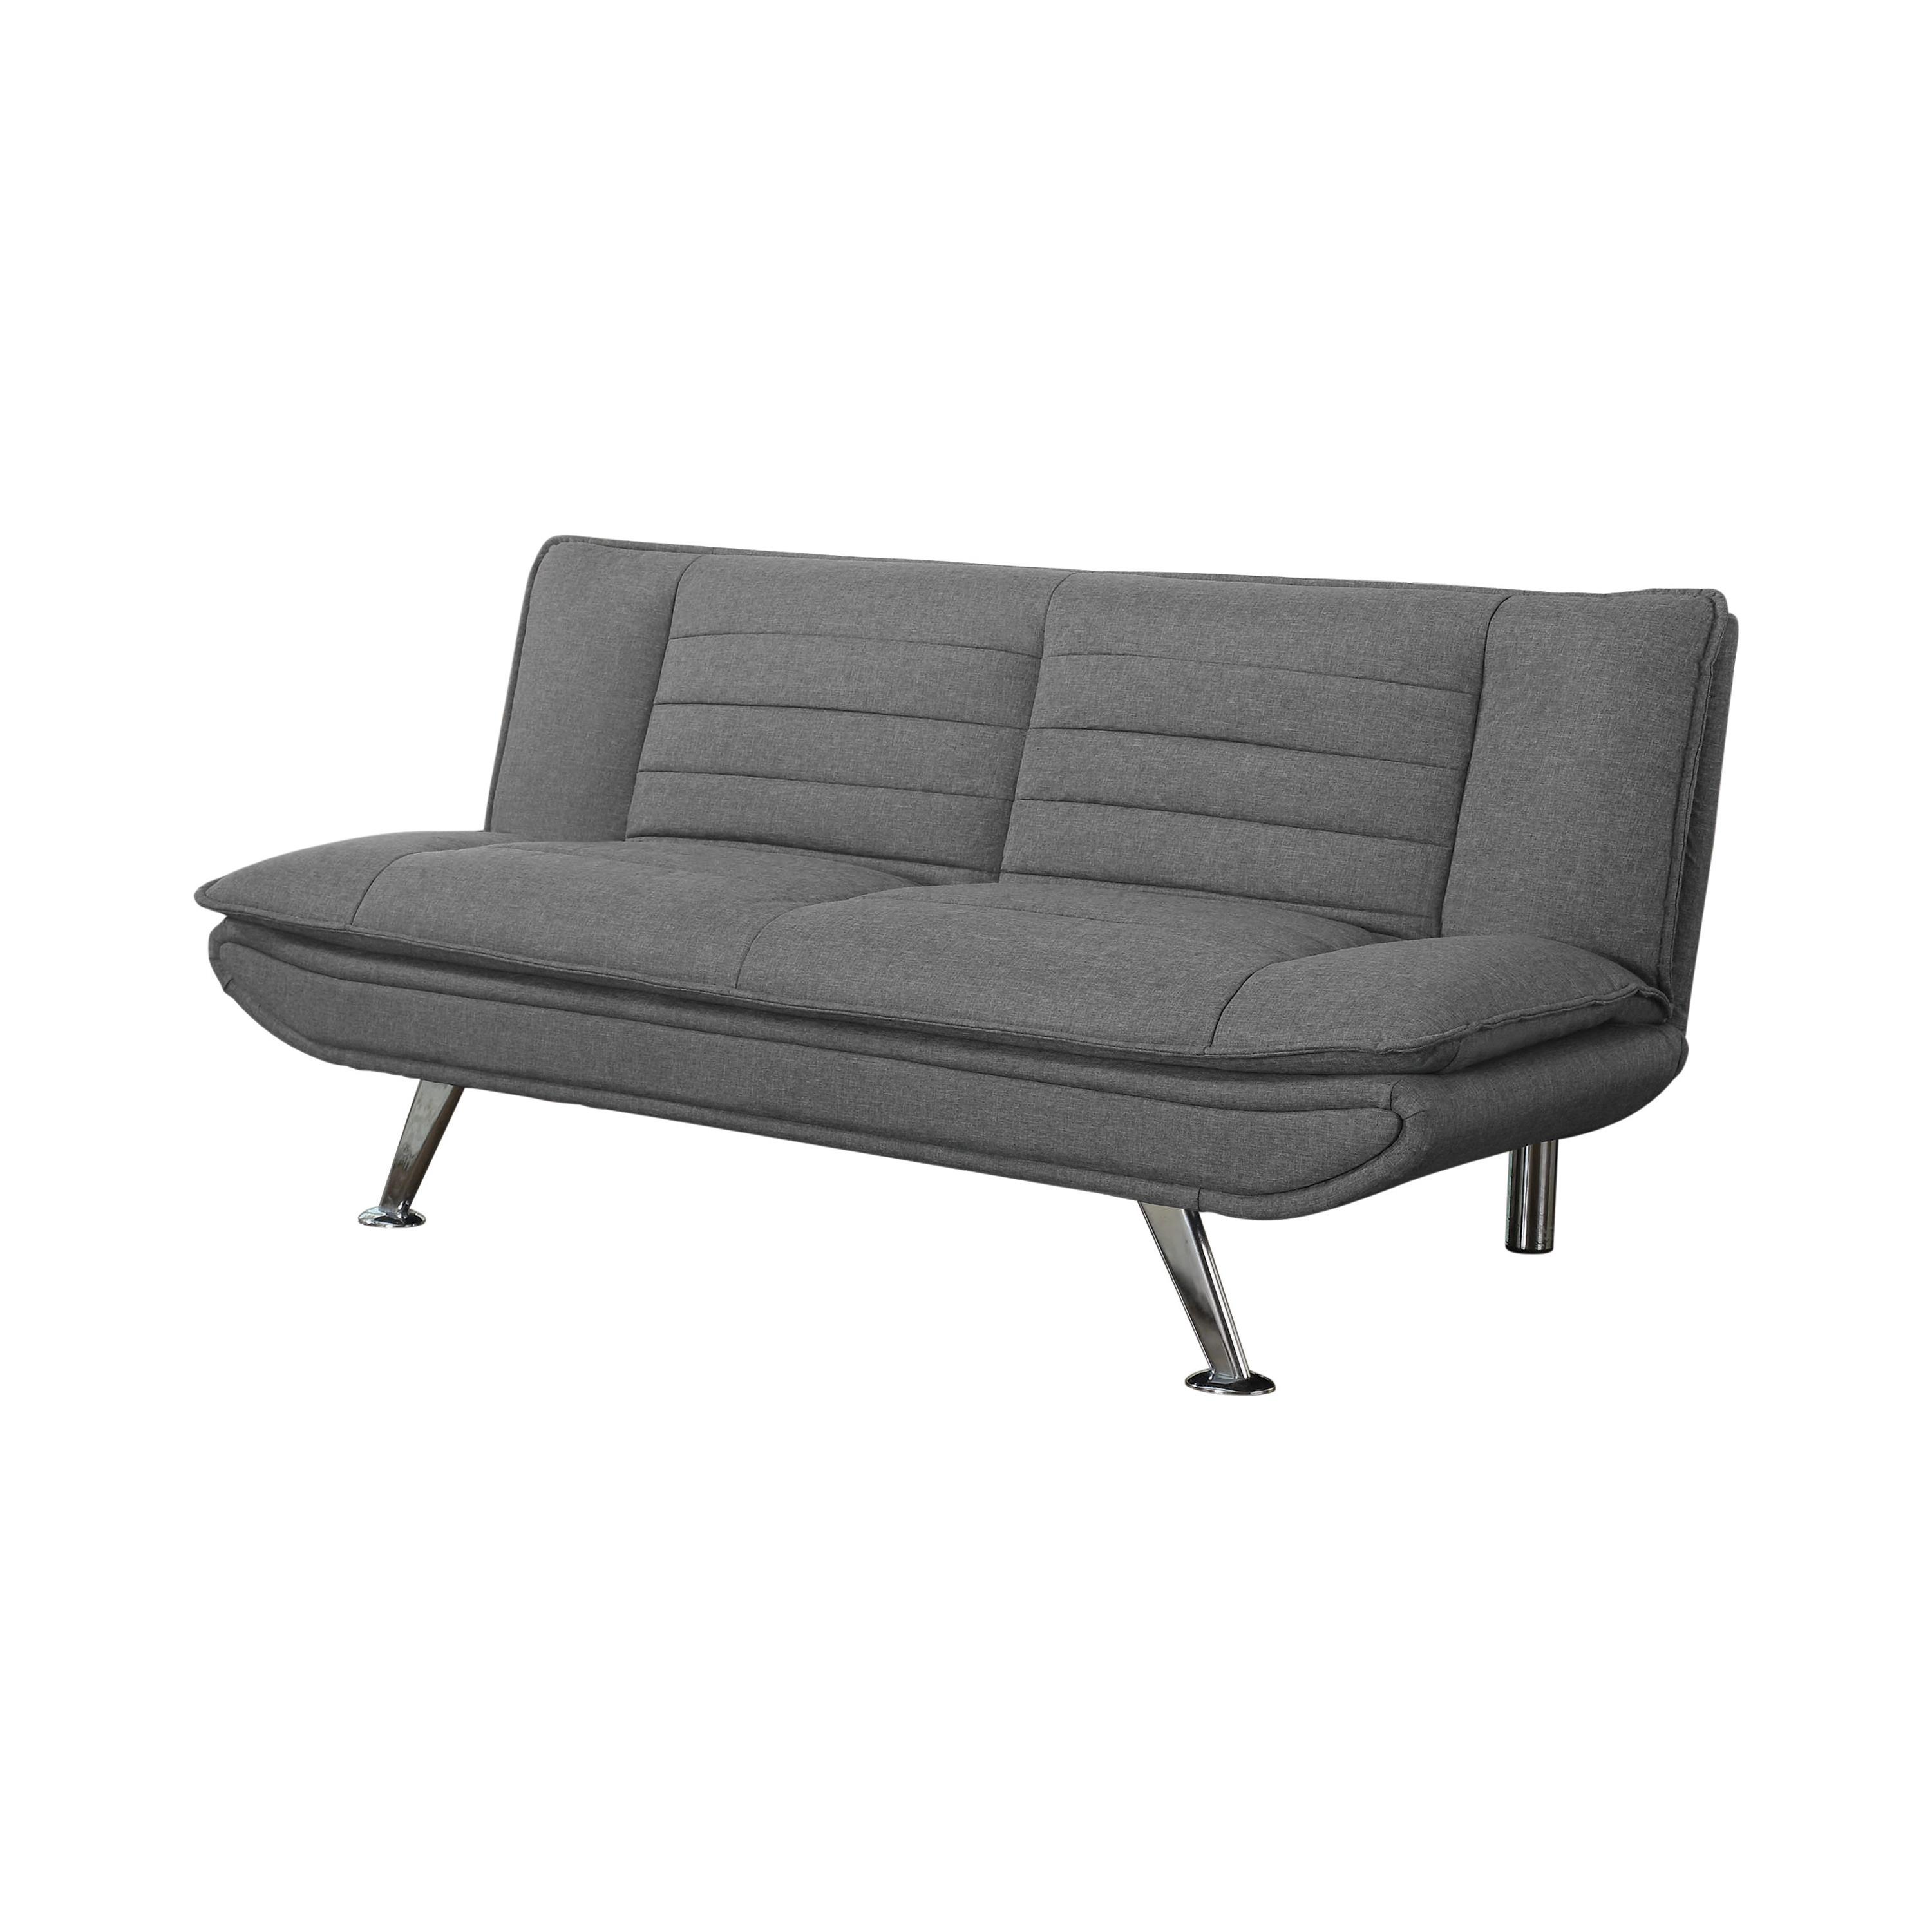 Contemporary Sofa bed 503966 Julian 503966 in Gray 